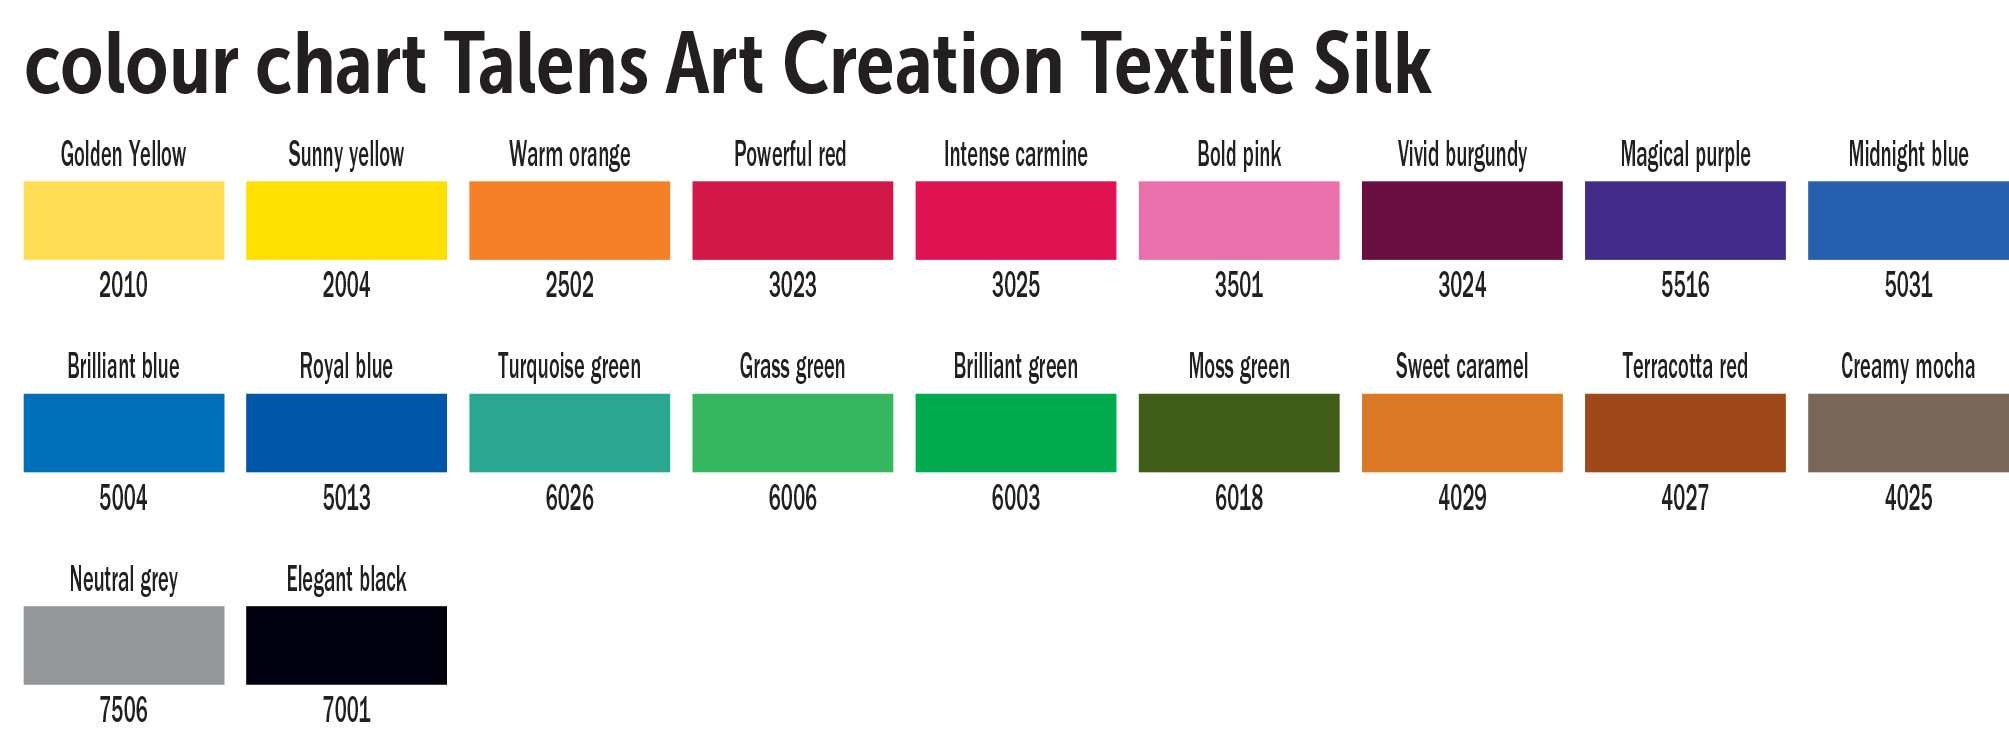 TAC Textile Silk